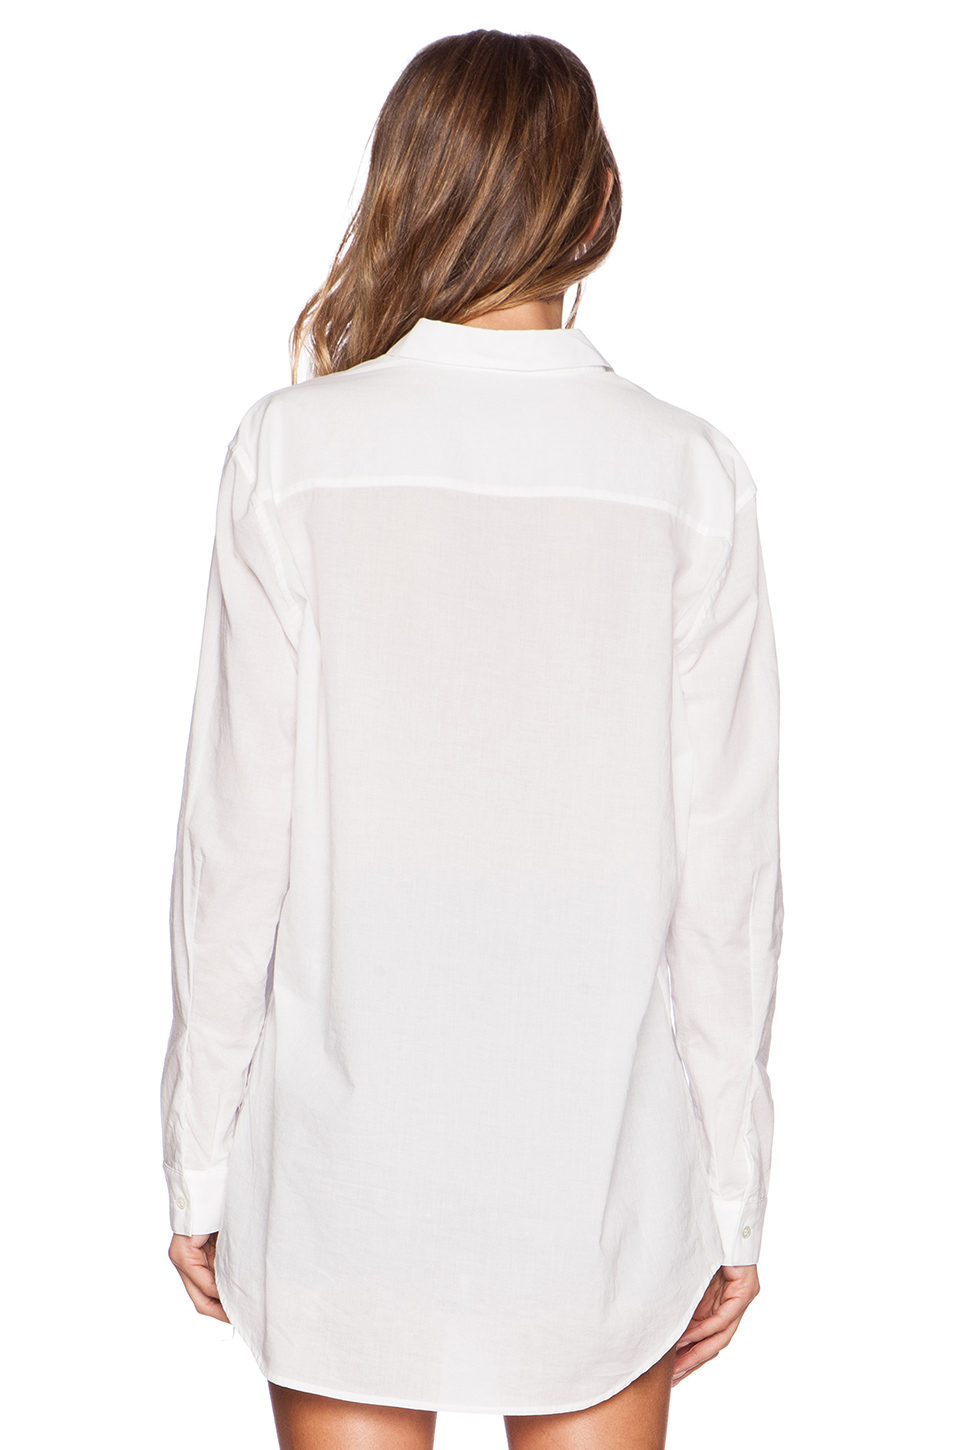 Lyst - Atm Boyfriend Oversized Dress Shirt in White